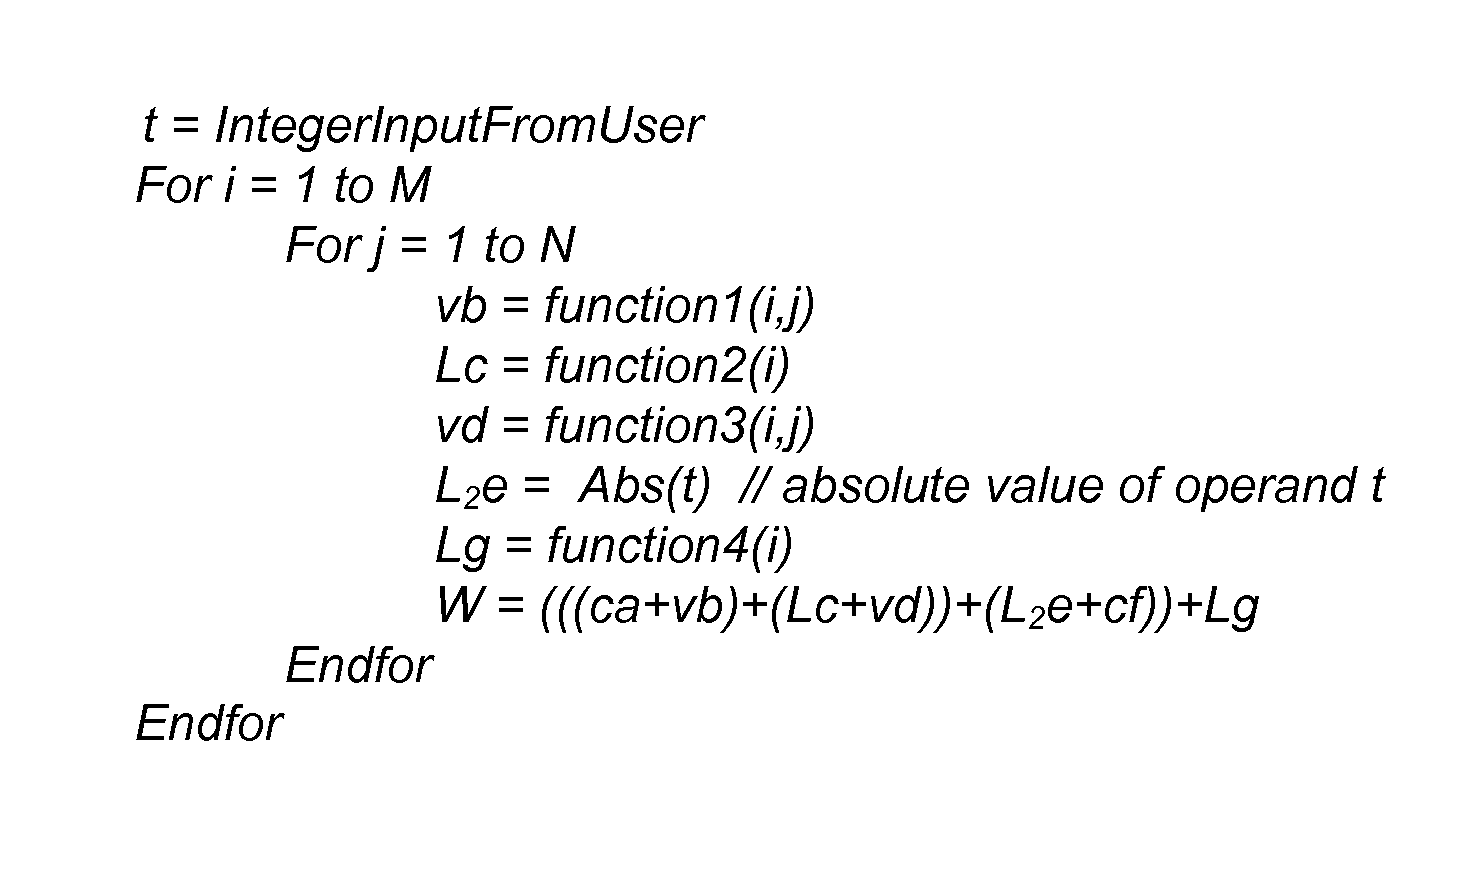 Rearrangement of algebraic expressions based on operand ranking schemes